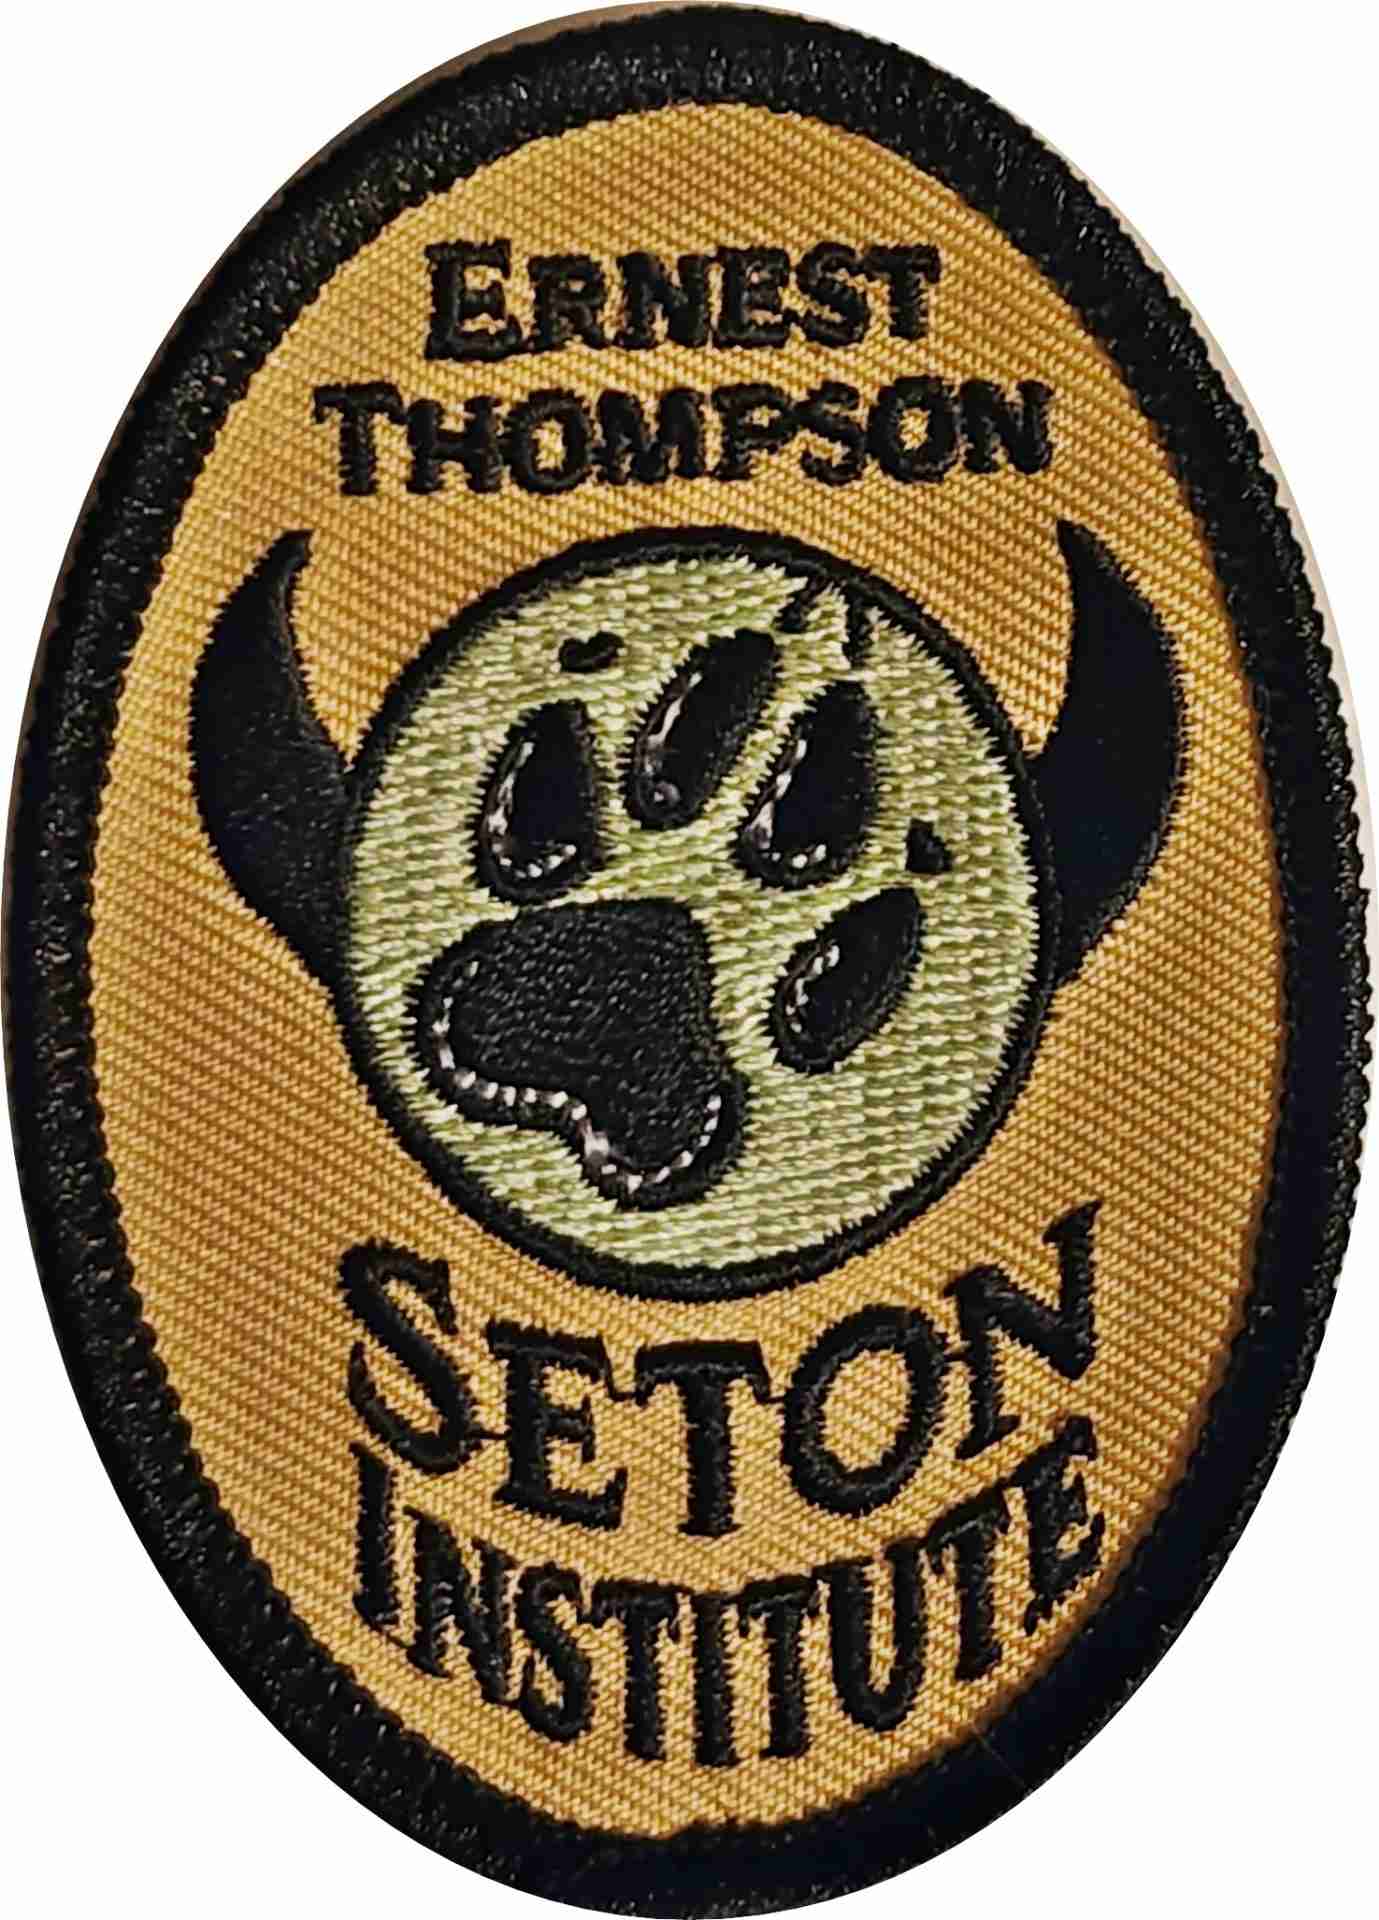 Ernest Thompson Seton Institute Patch